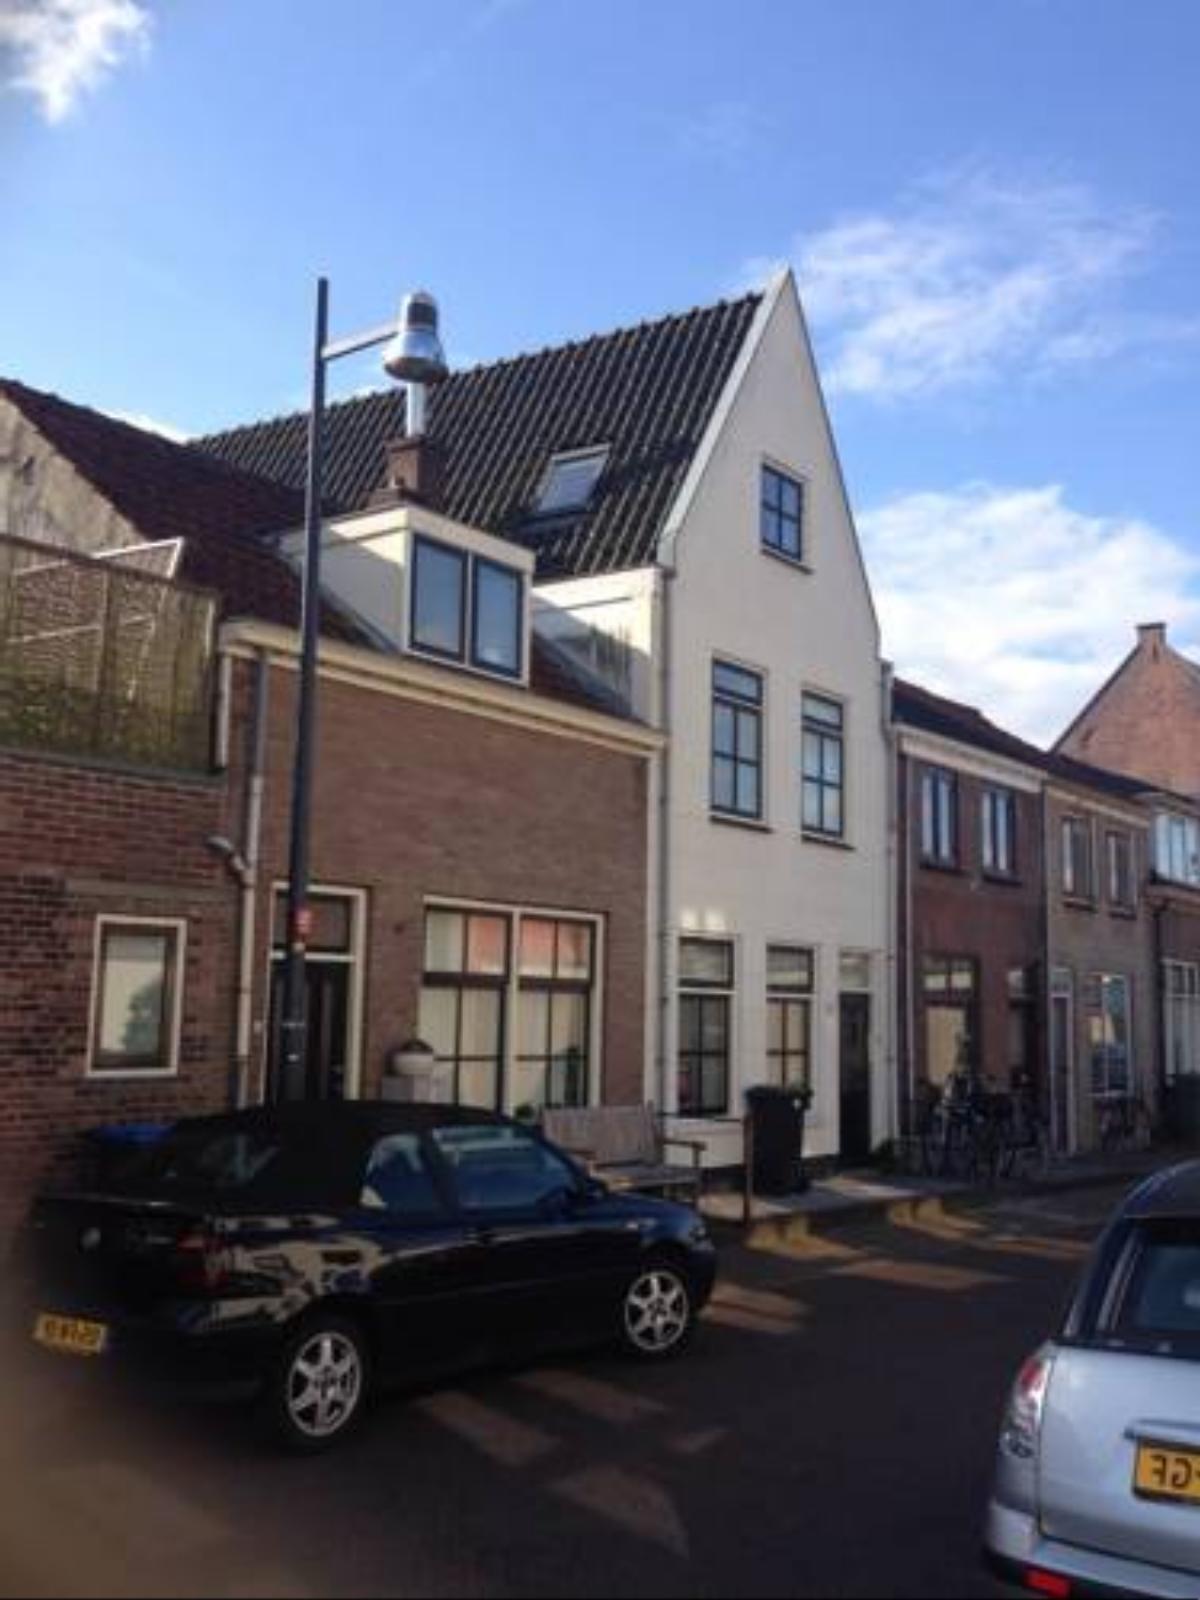 Familiehuis in stadscentrum Zaltbommel